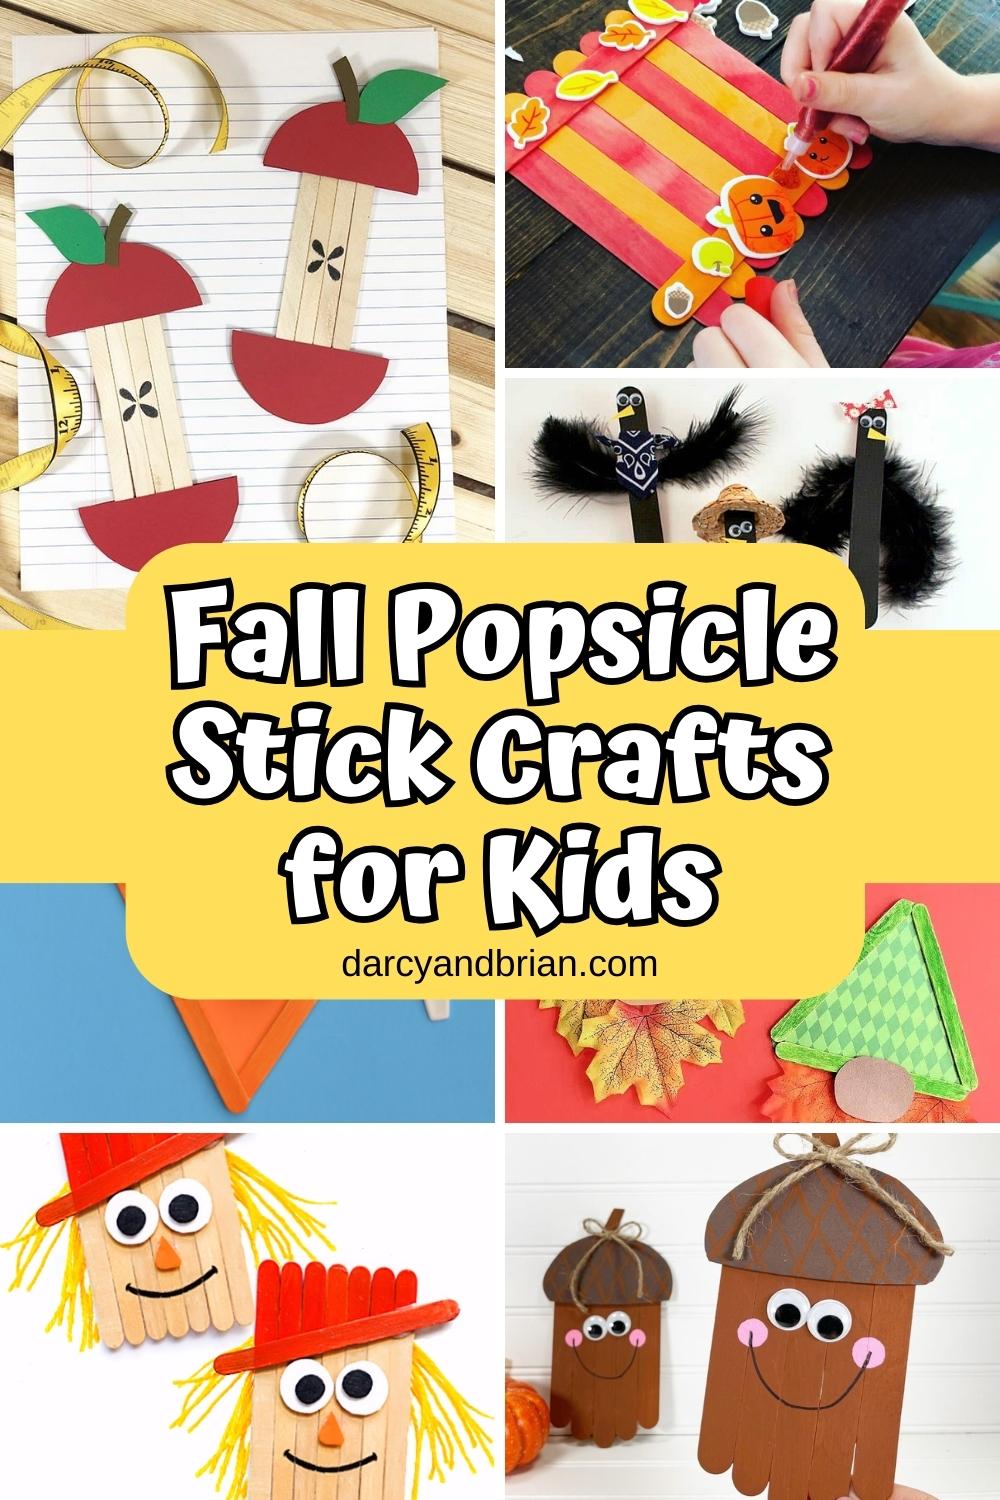 Easy Unicorn Craft Using Popsicle Sticks 